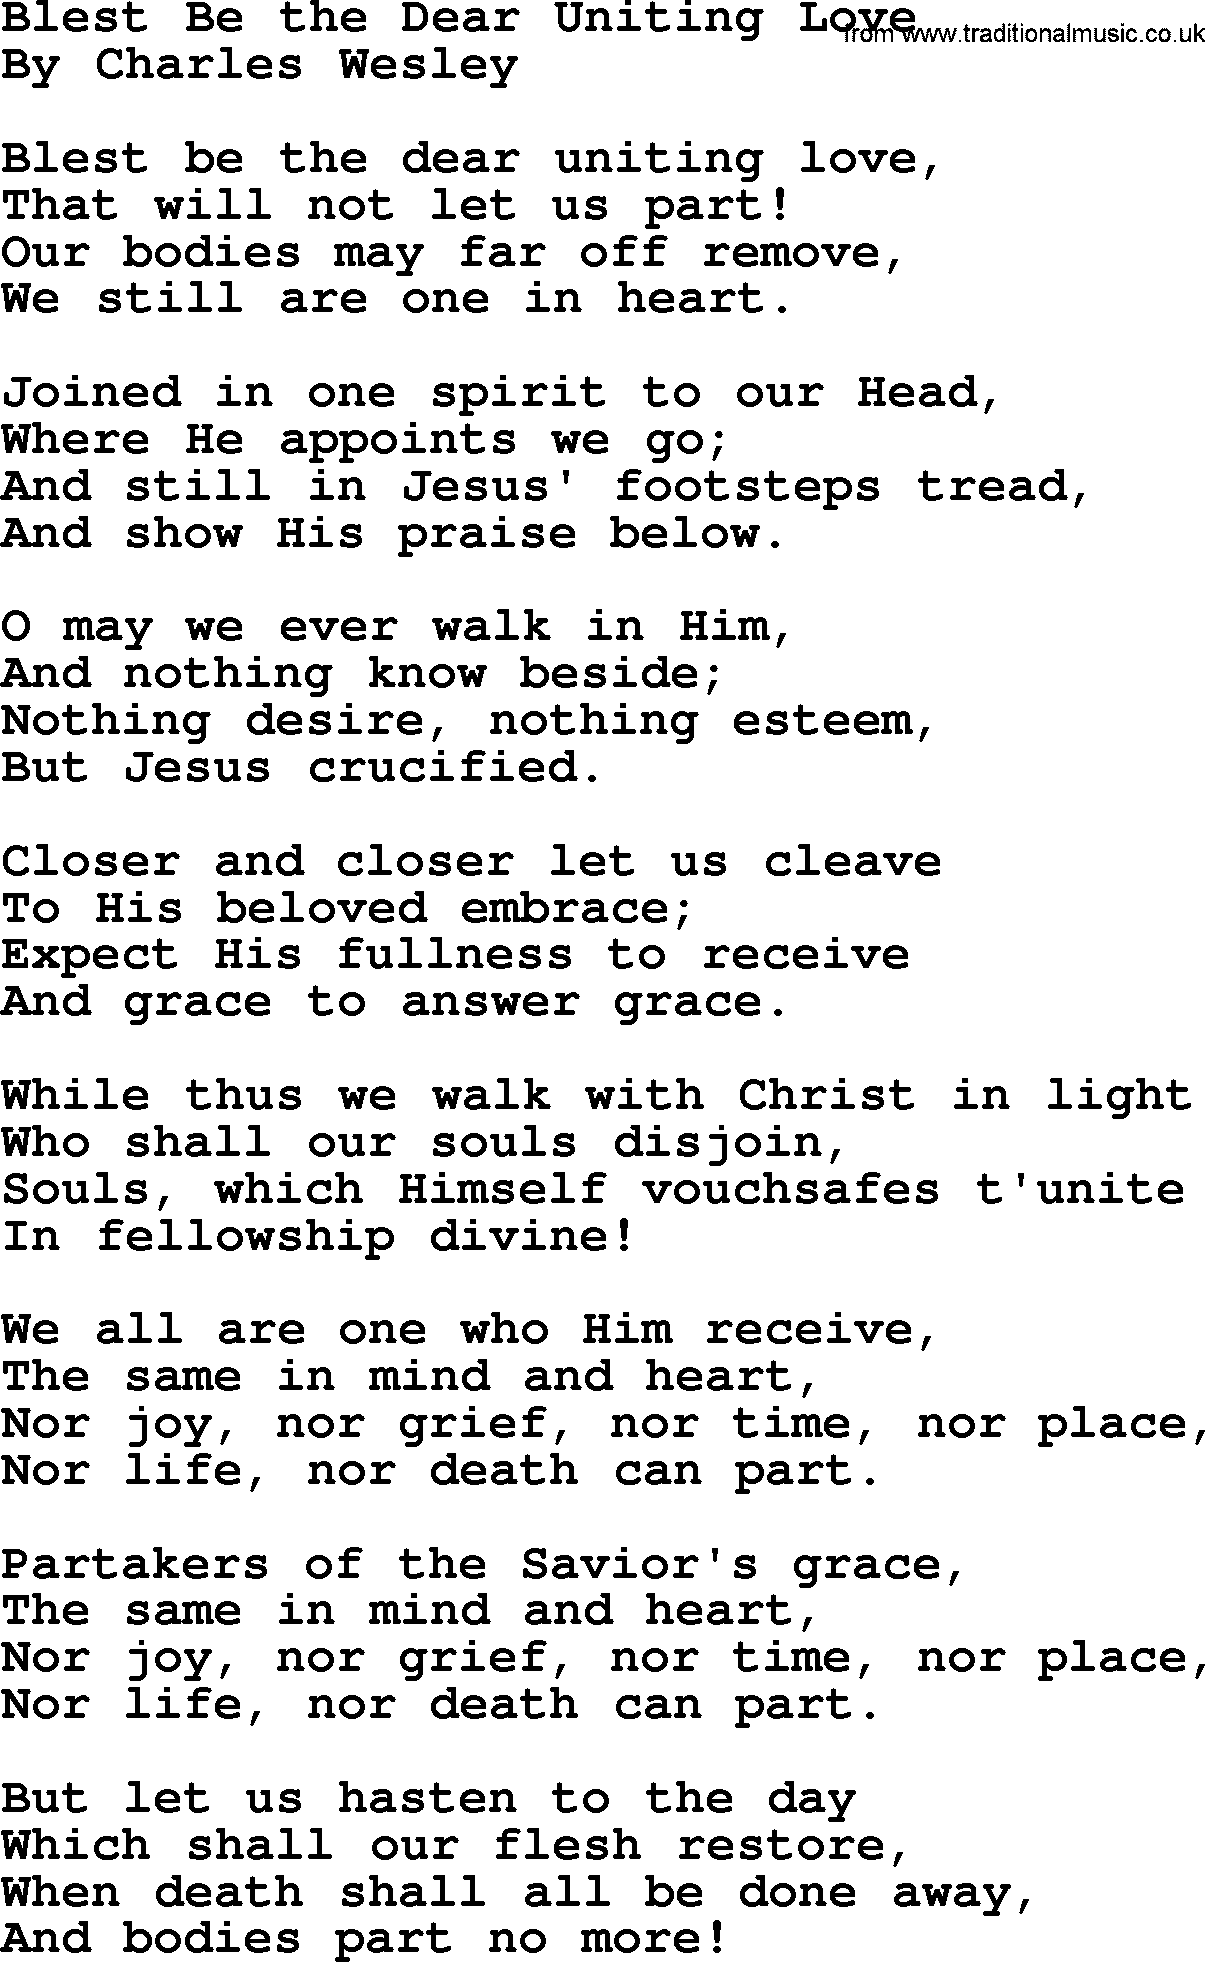 Charles Wesley hymn: Blest Be The Dear Uniting Love, lyrics